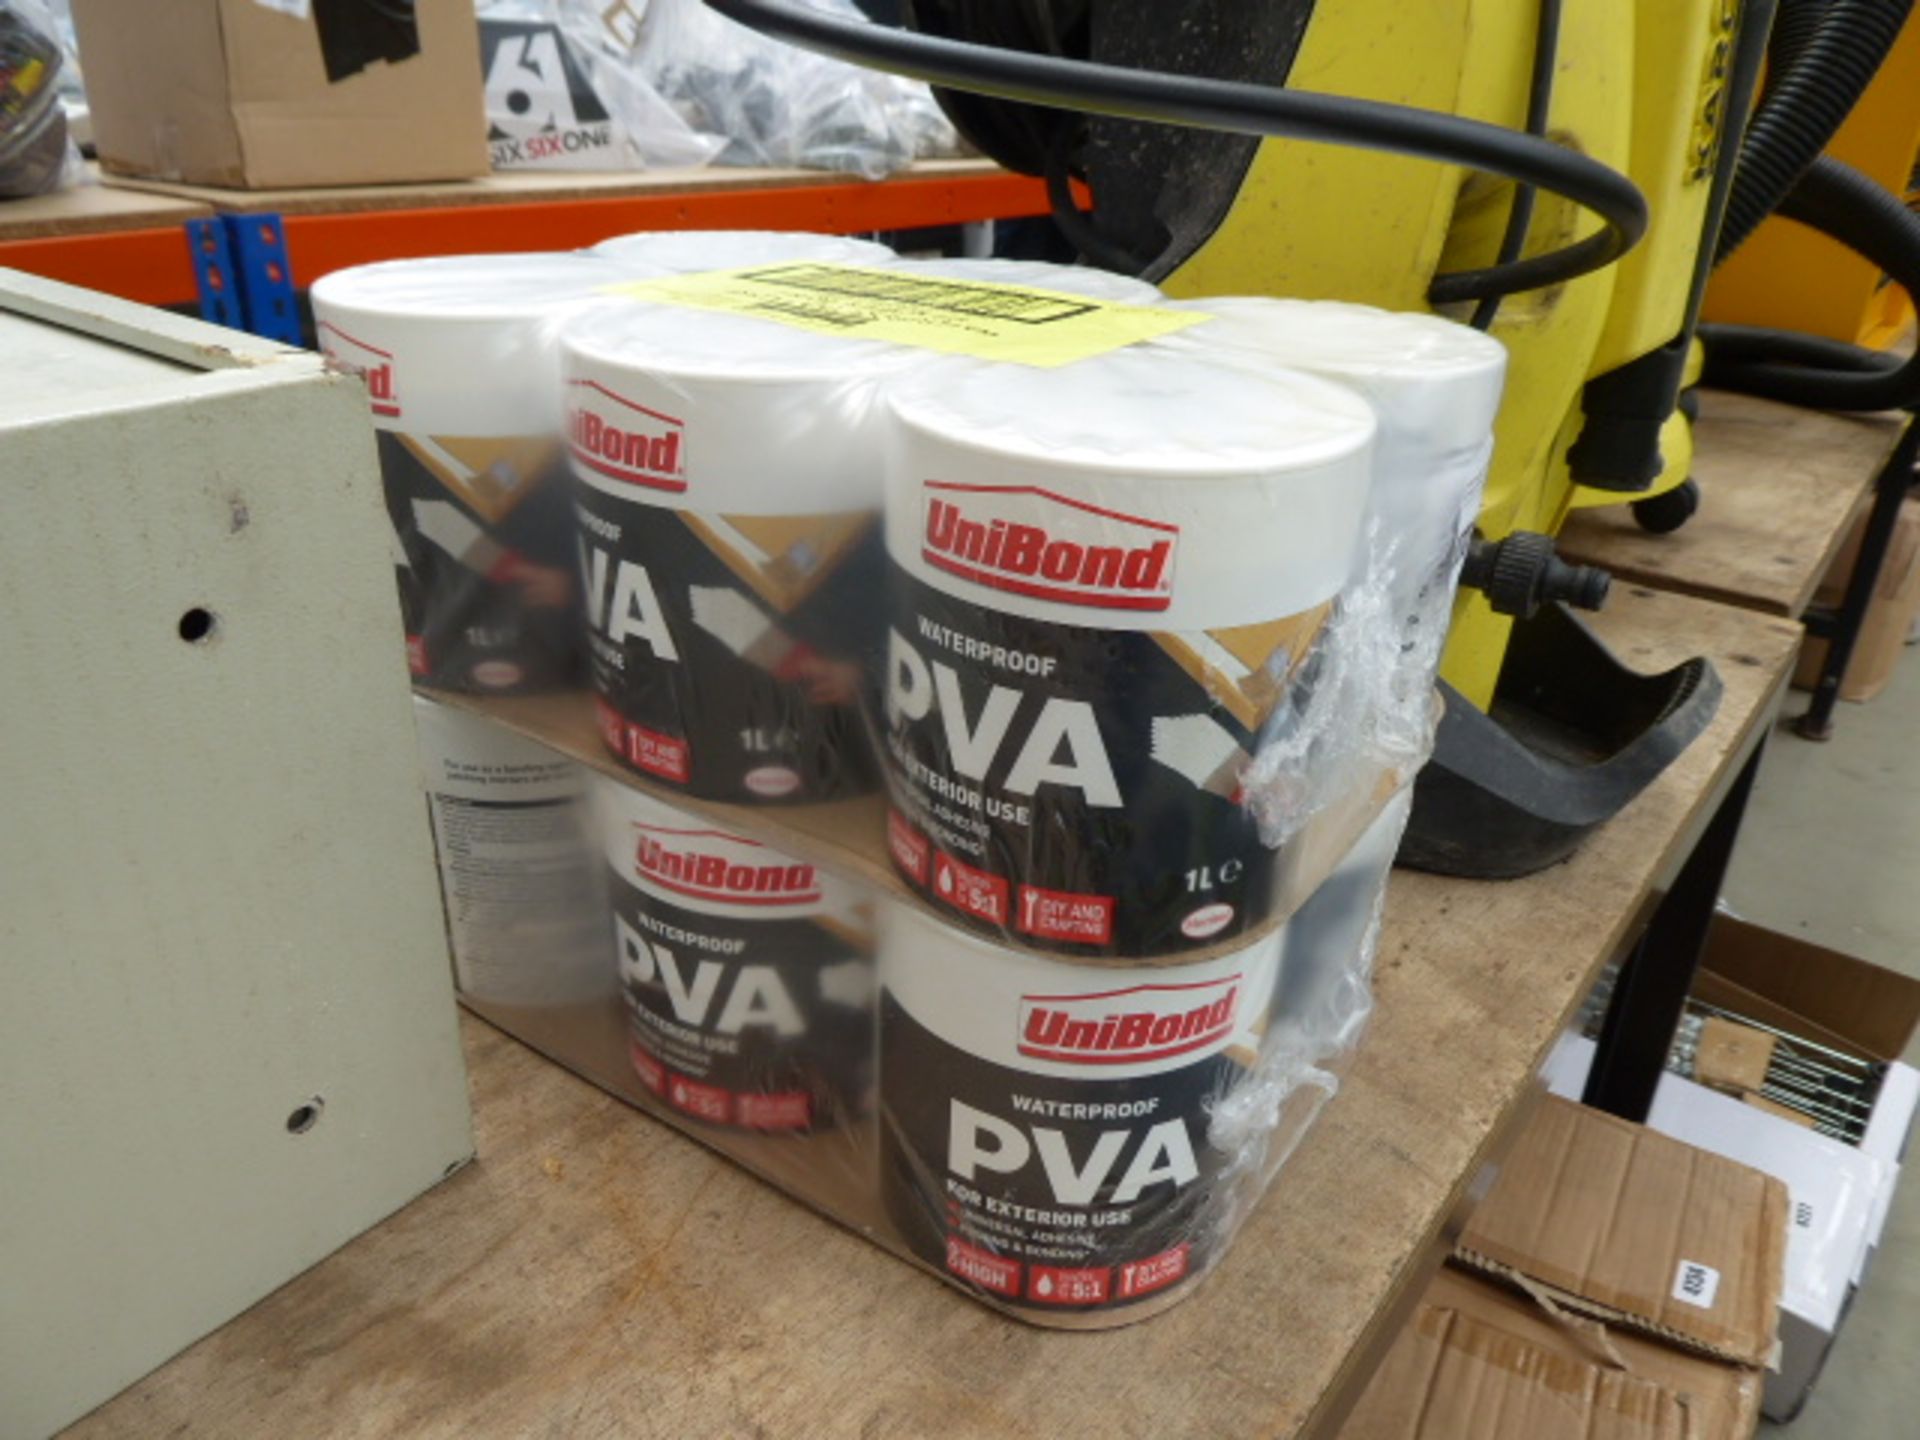 4470 - 12 tins of waterproof PVA glue